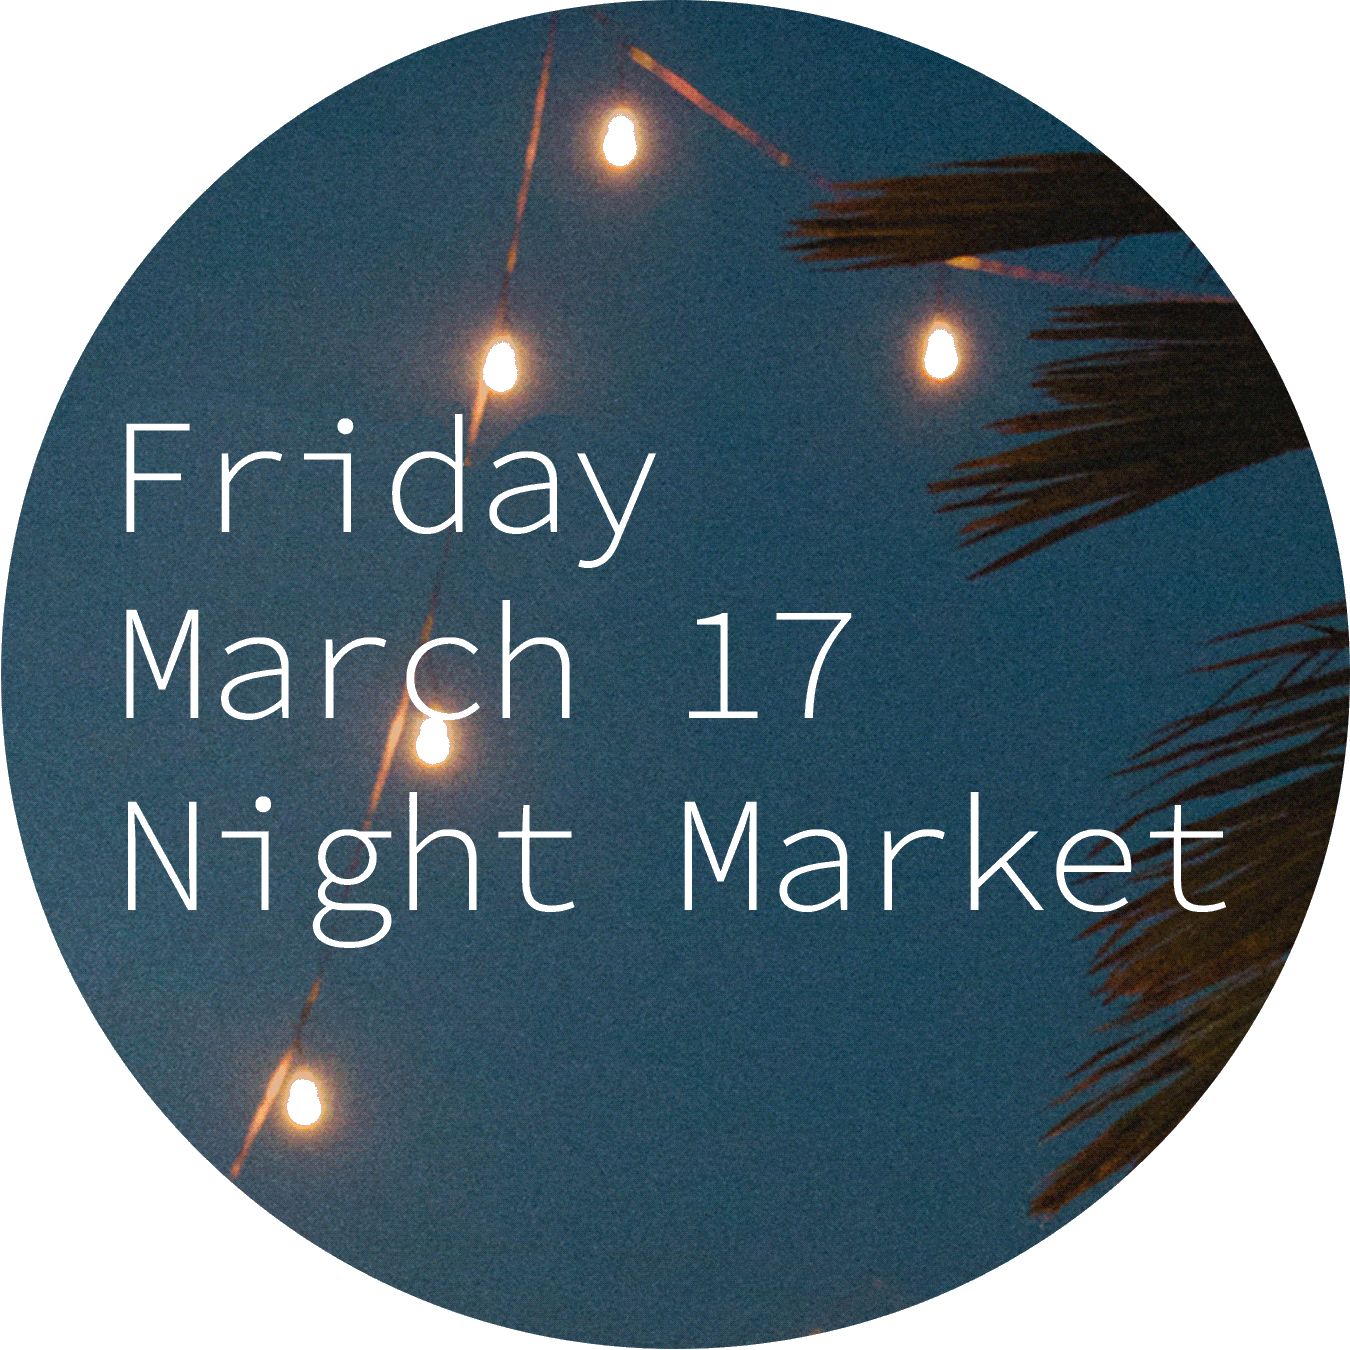 Friday march 17 night market.